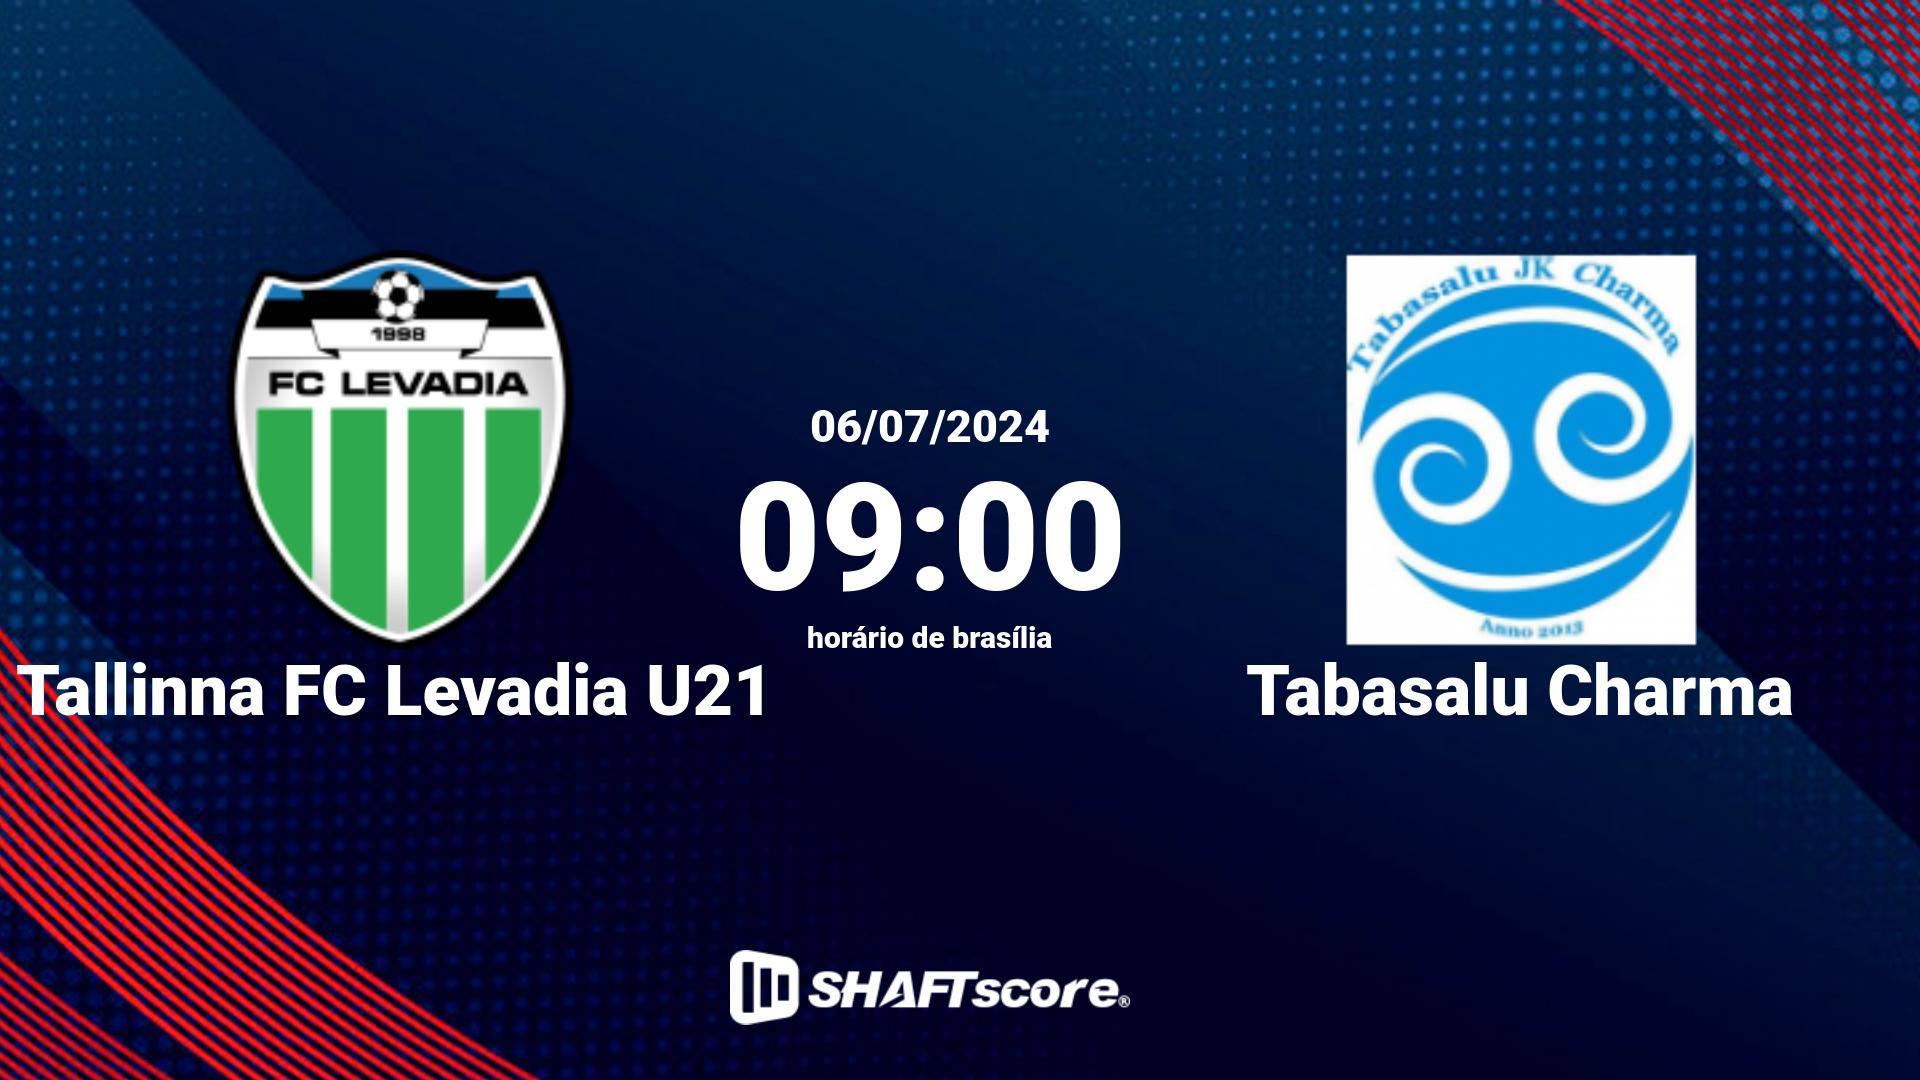 Estatísticas do jogo Tallinna FC Levadia U21 vs Tabasalu Charma 06.07 09:00